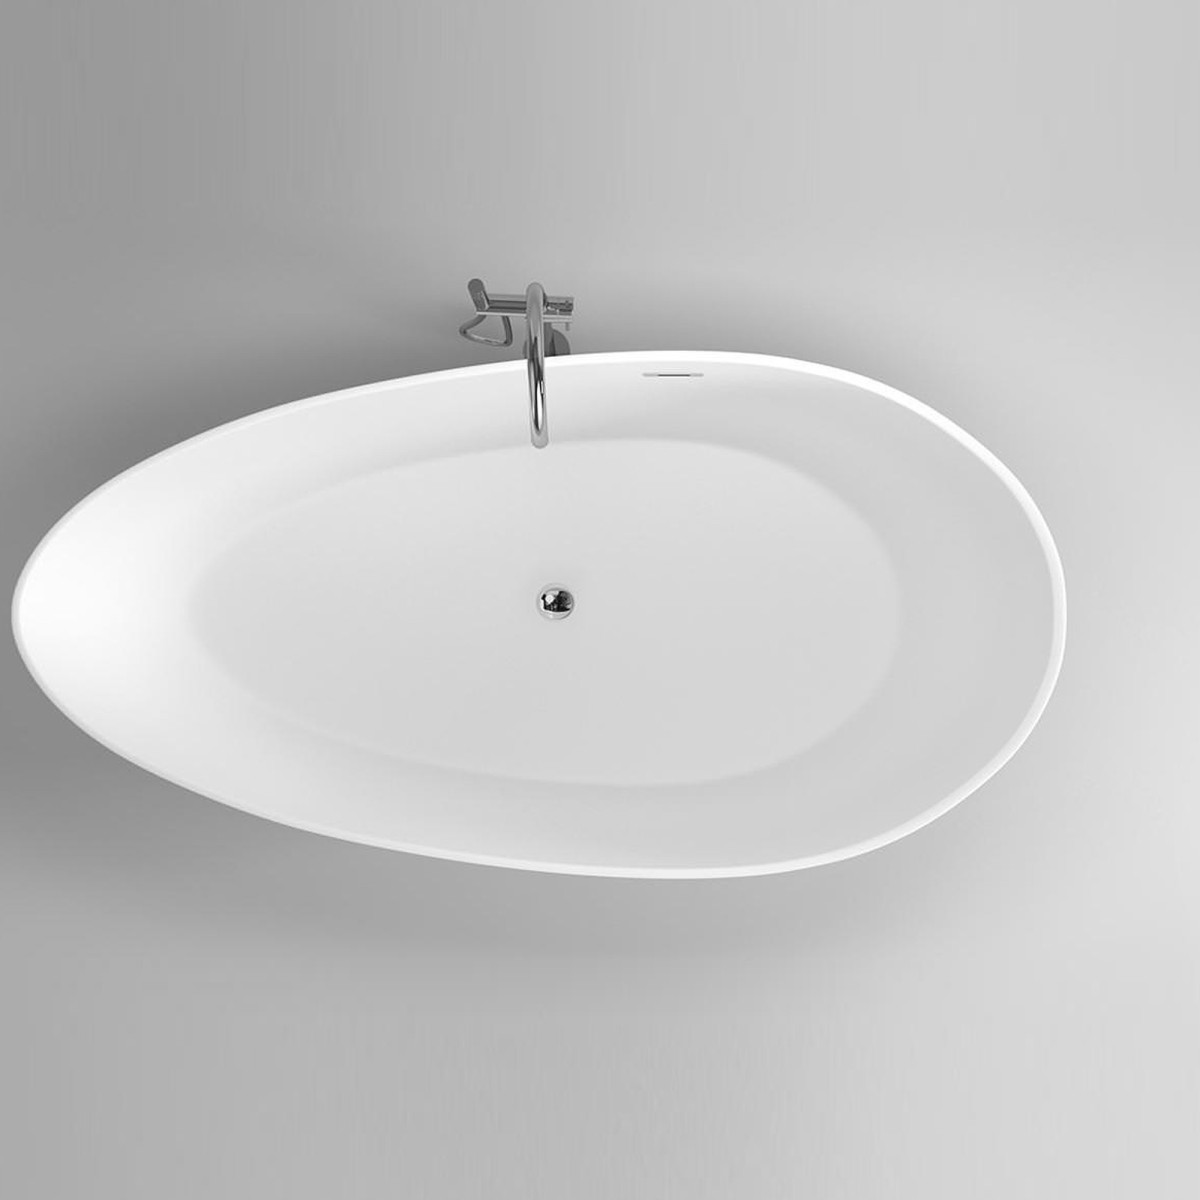 Baignoire Pisa 90x180 en acrylique sanitaire Appggio